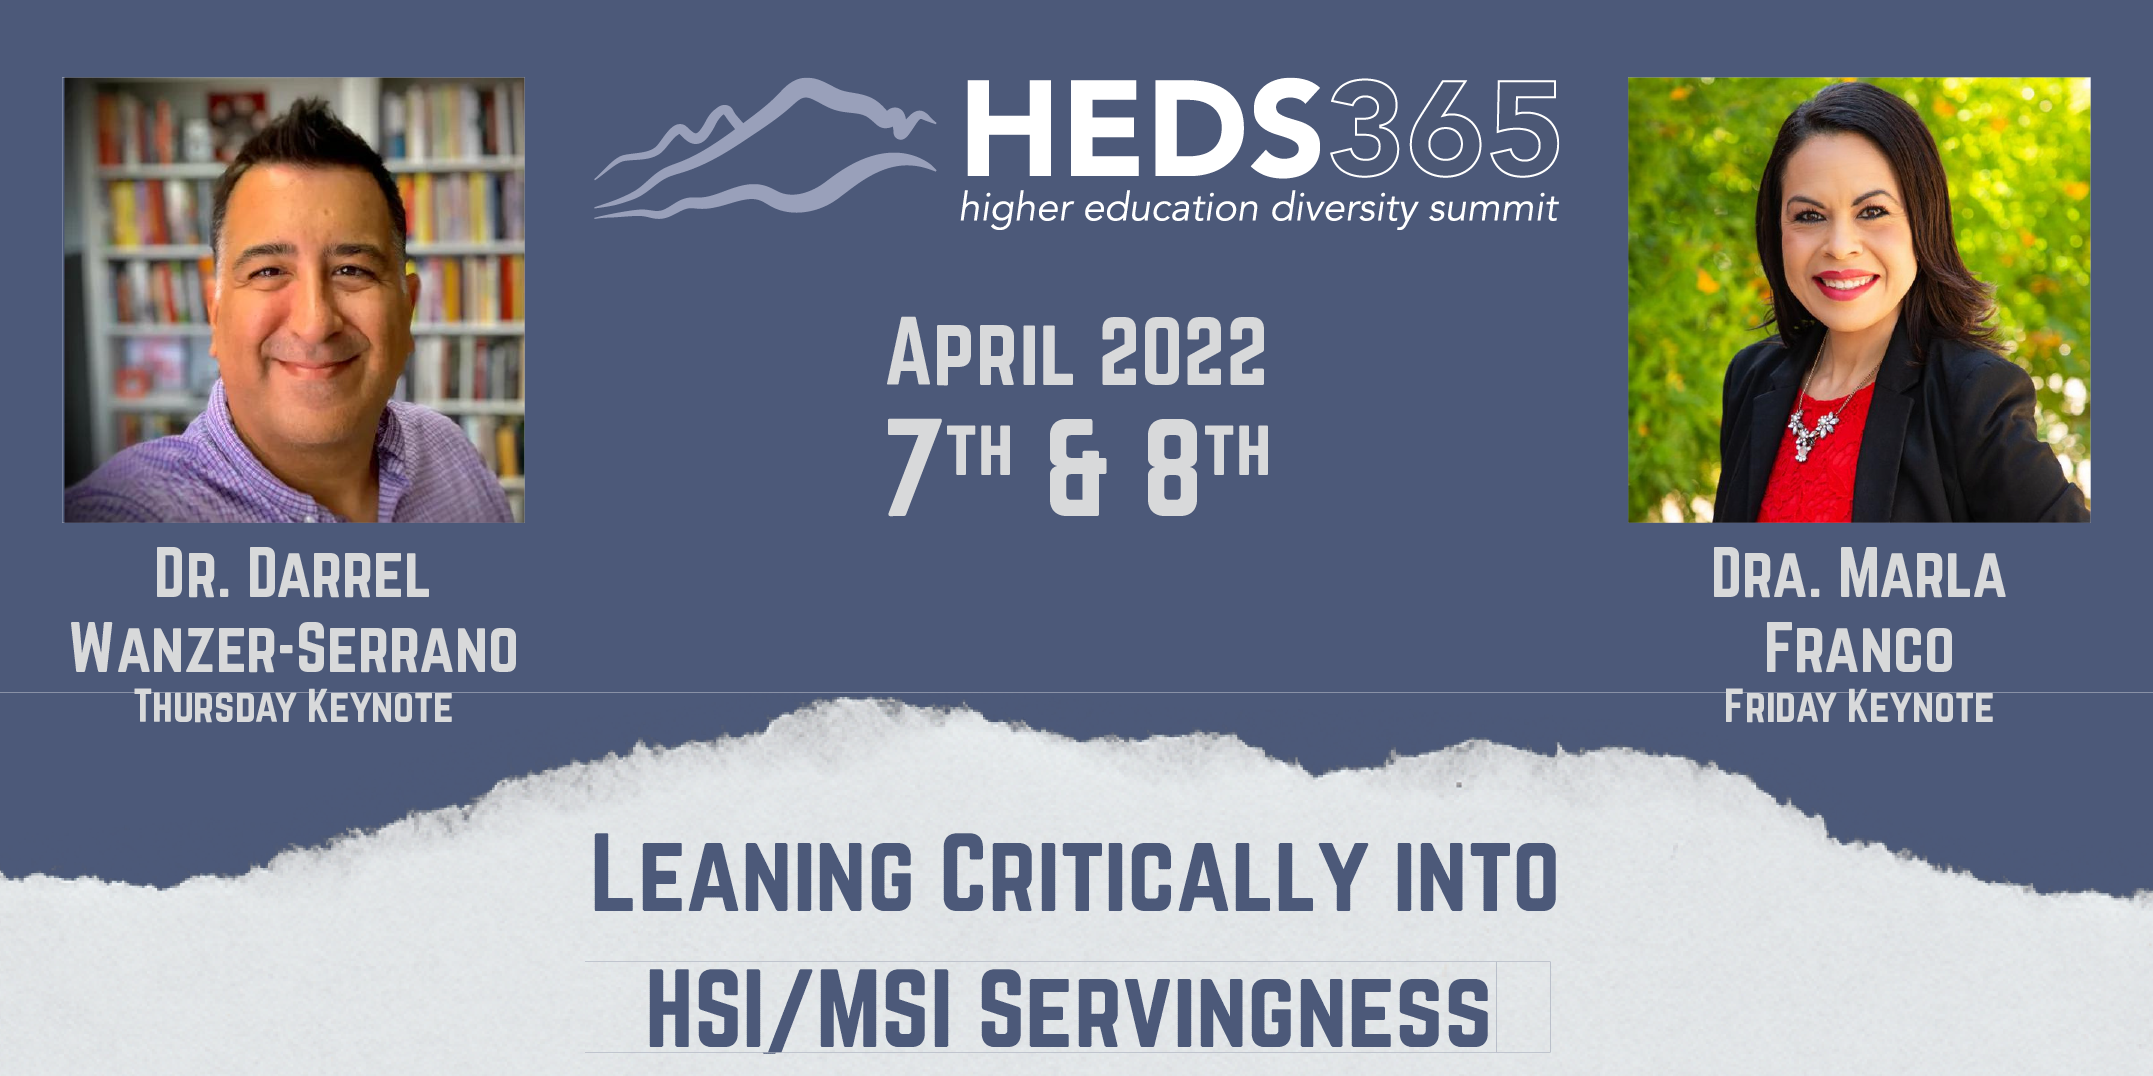 HEDS365 April 7th and 8th 2022, Thursday Keynote Dr. Darrel Wanzer-Serrano, Friday Keynote Dra. Marla Franco